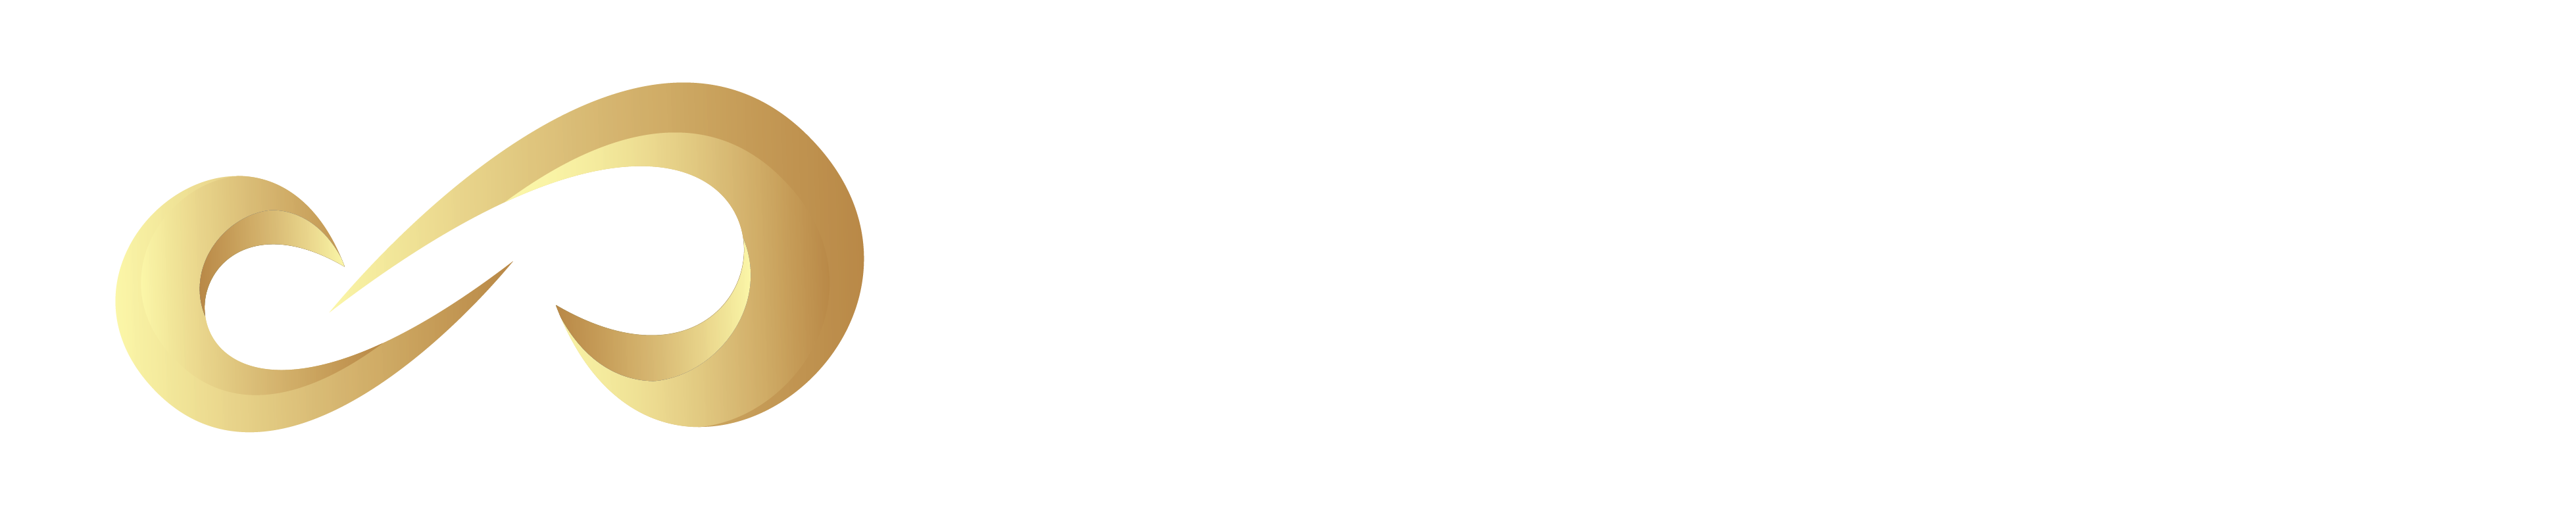 Infiniti Films logo horizontal